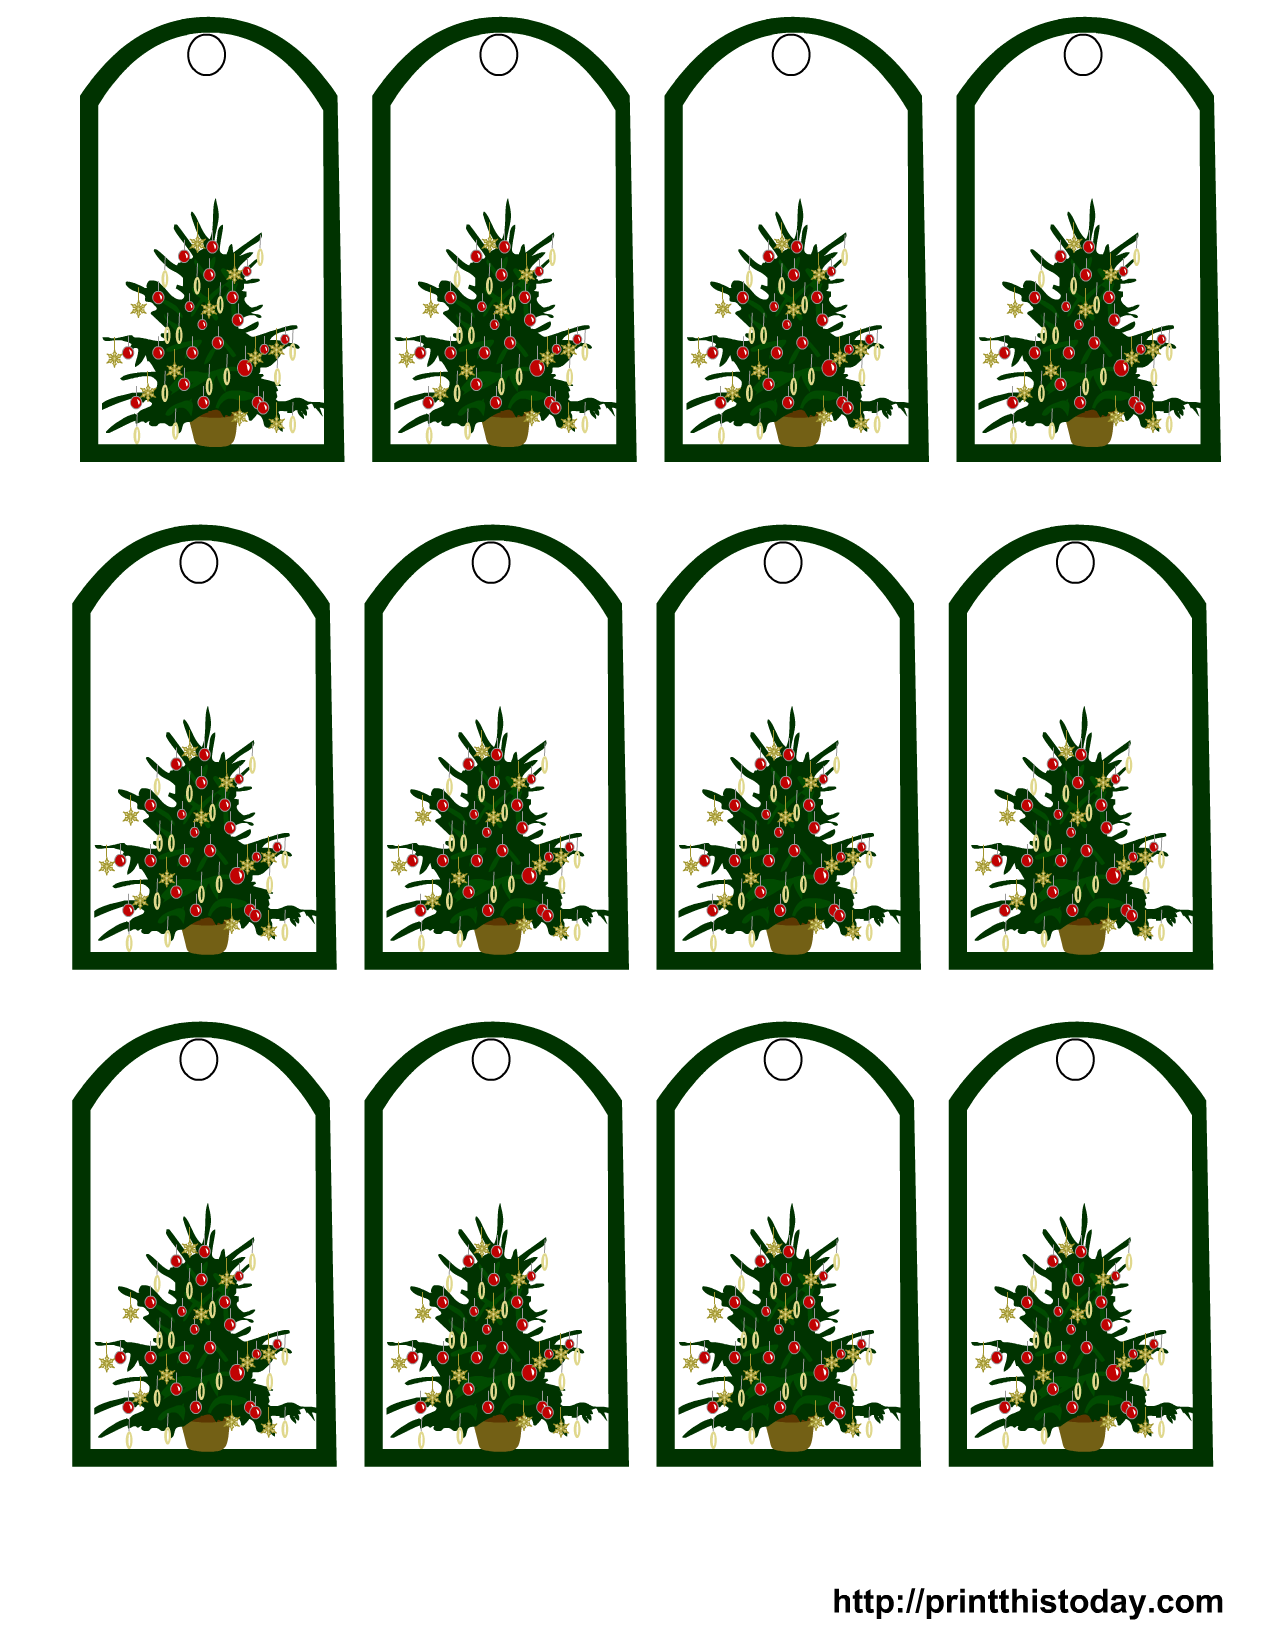 Free Printable Christmas Gift Tags Featuring Christmas Tree